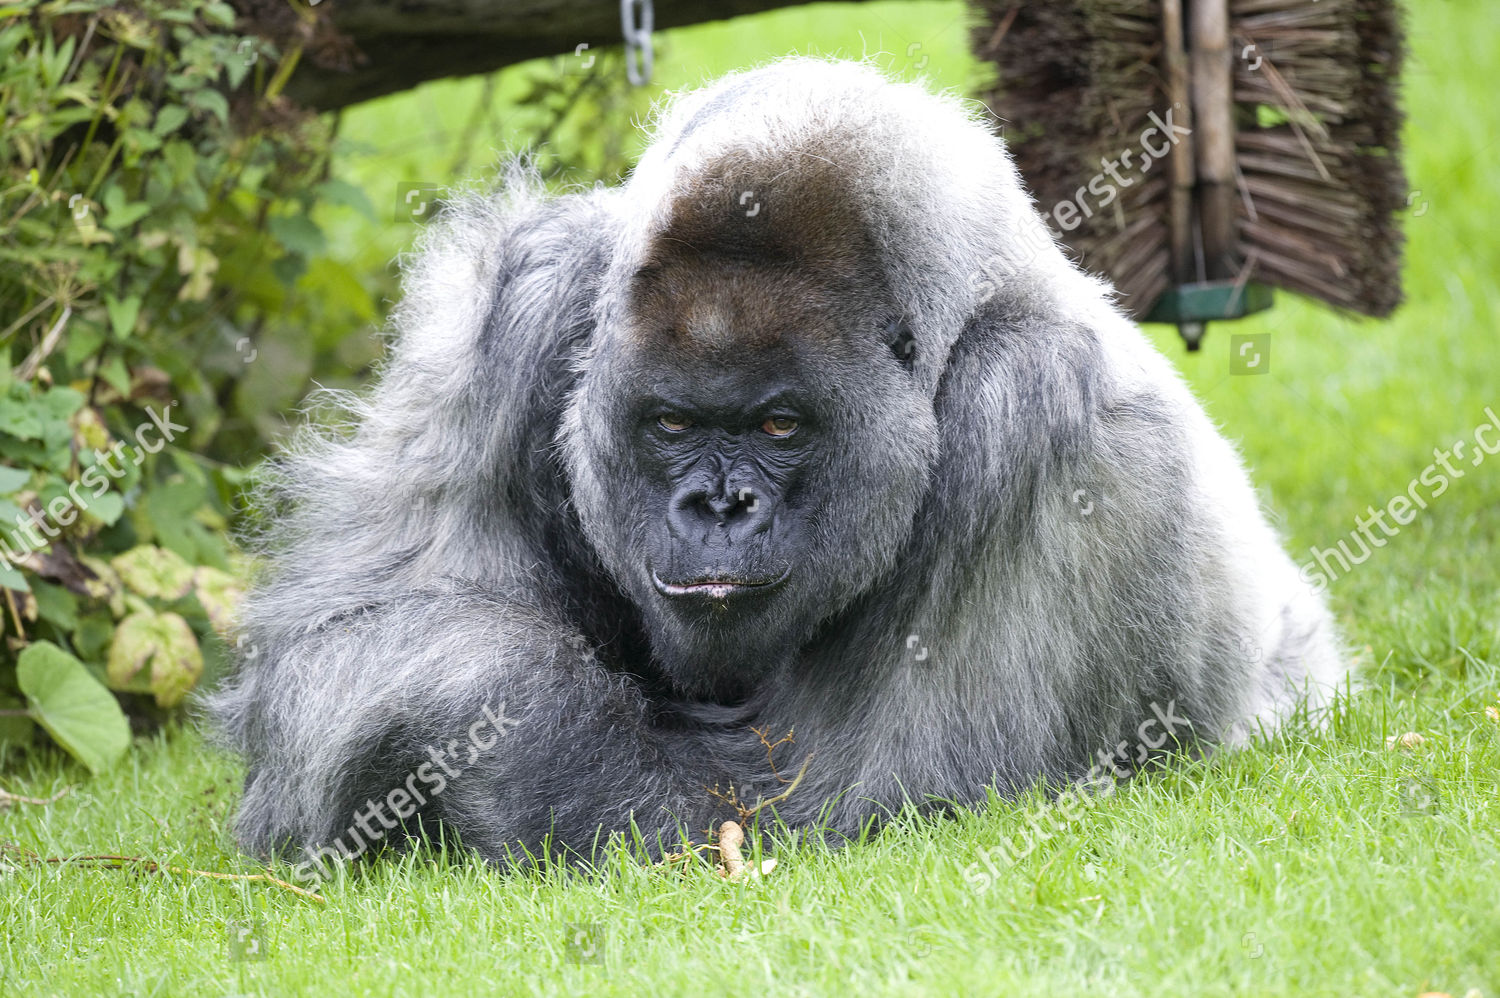 longleat safari park silverback gorilla